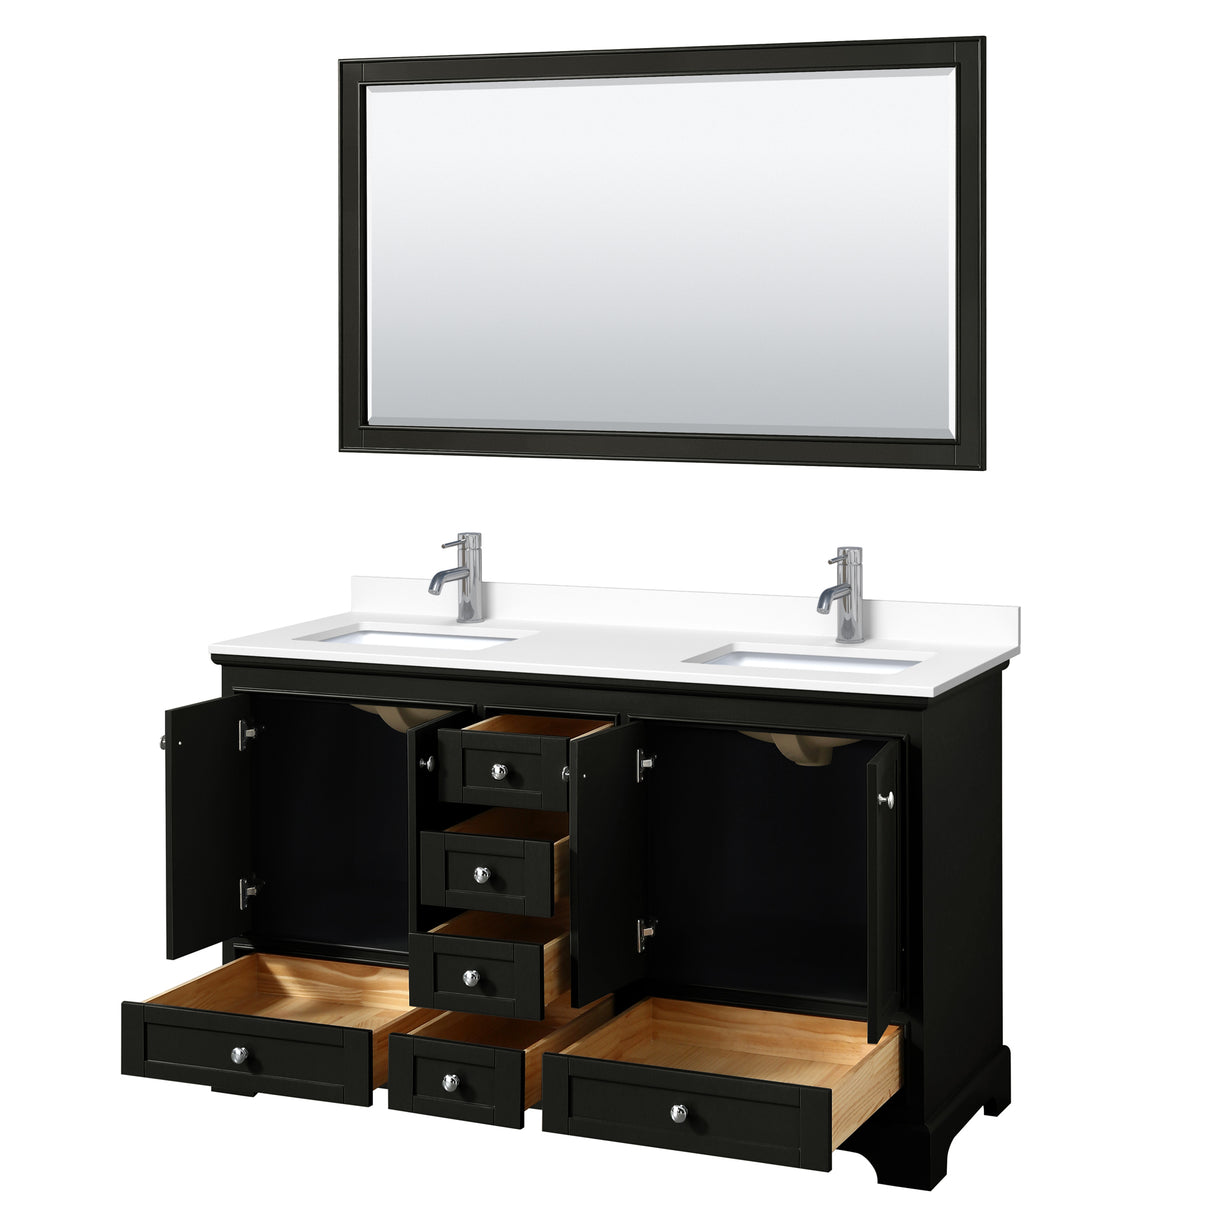 Deborah 60 Inch Double Bathroom Vanity in Dark Espresso White Cultured Marble Countertop Undermount Square Sinks 58 Inch Mirror